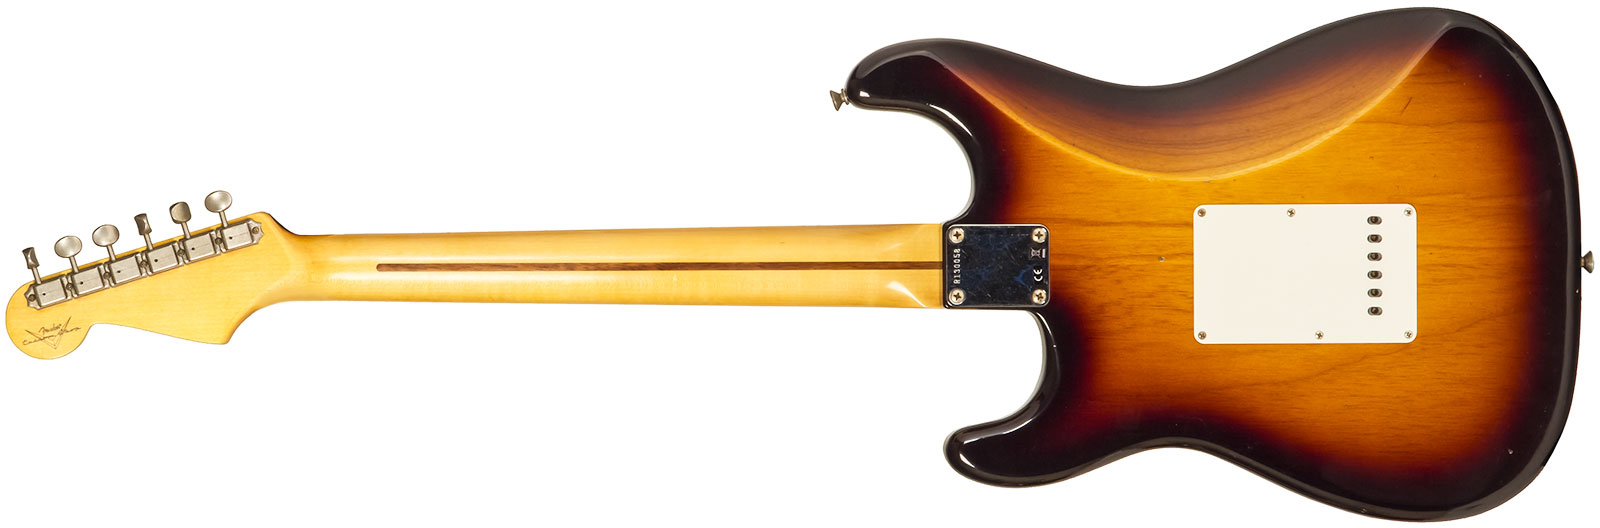 Fender Custom Shop Strat 1955 3s Trem Mn #r130058 - Journeyman Relic 2-color Sunburst - Guitare Électrique Forme Str - Variation 2